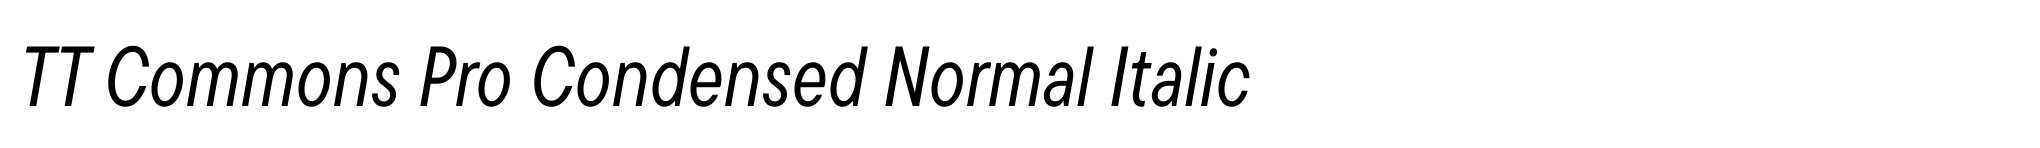 TT Commons Pro Condensed Normal Italic image